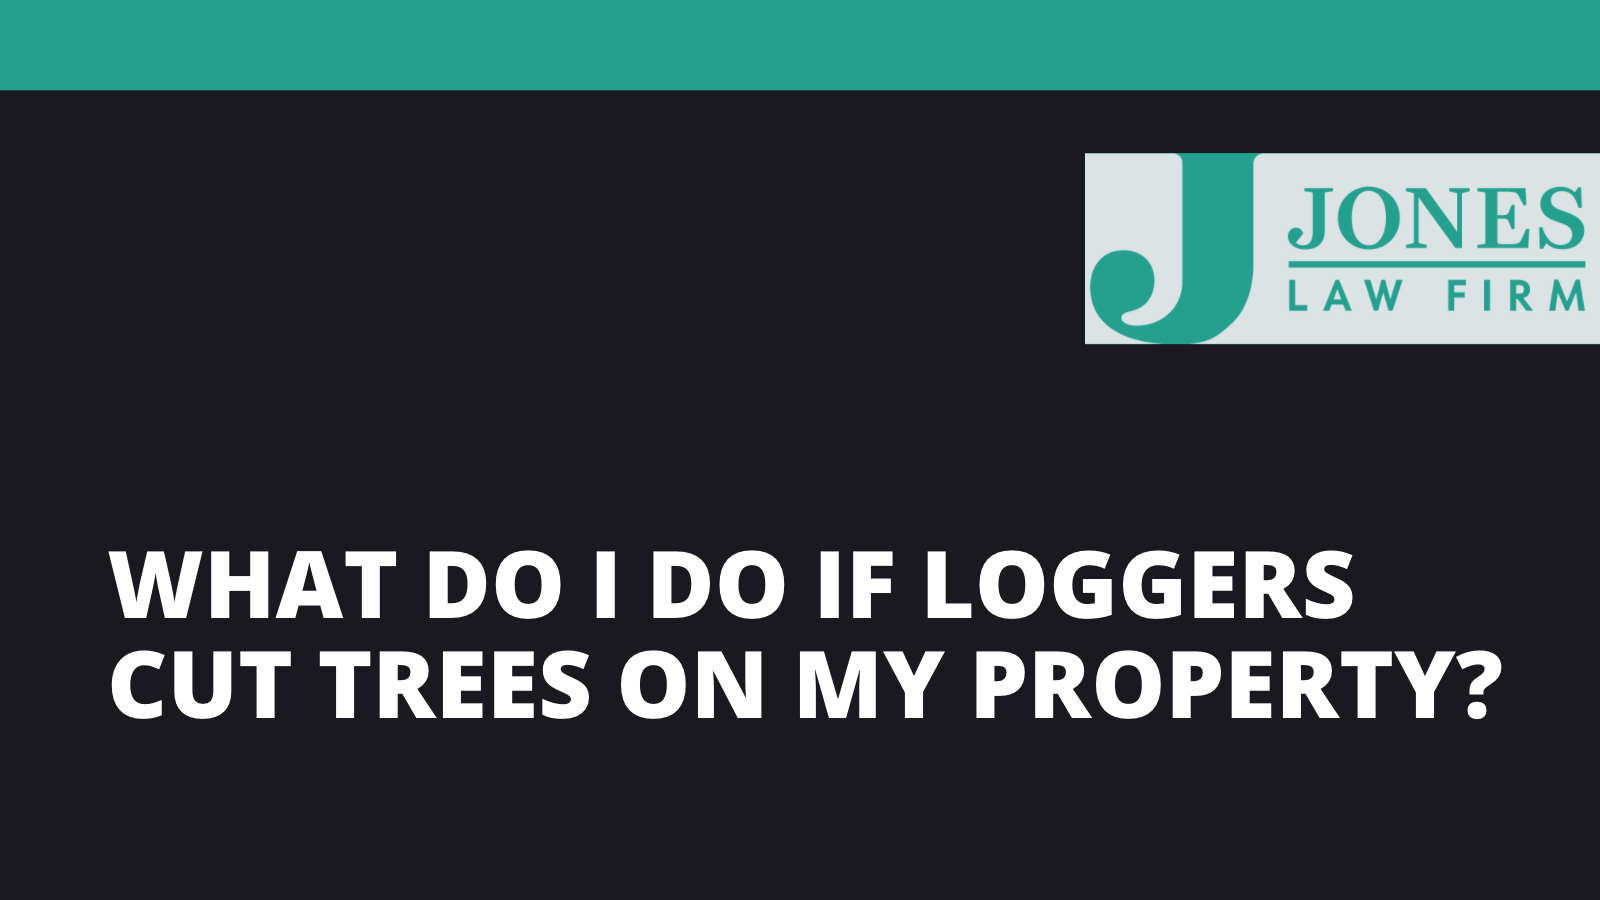 What do I do if loggers cut trees on my property - Jones law firm - Alexandria louisiana